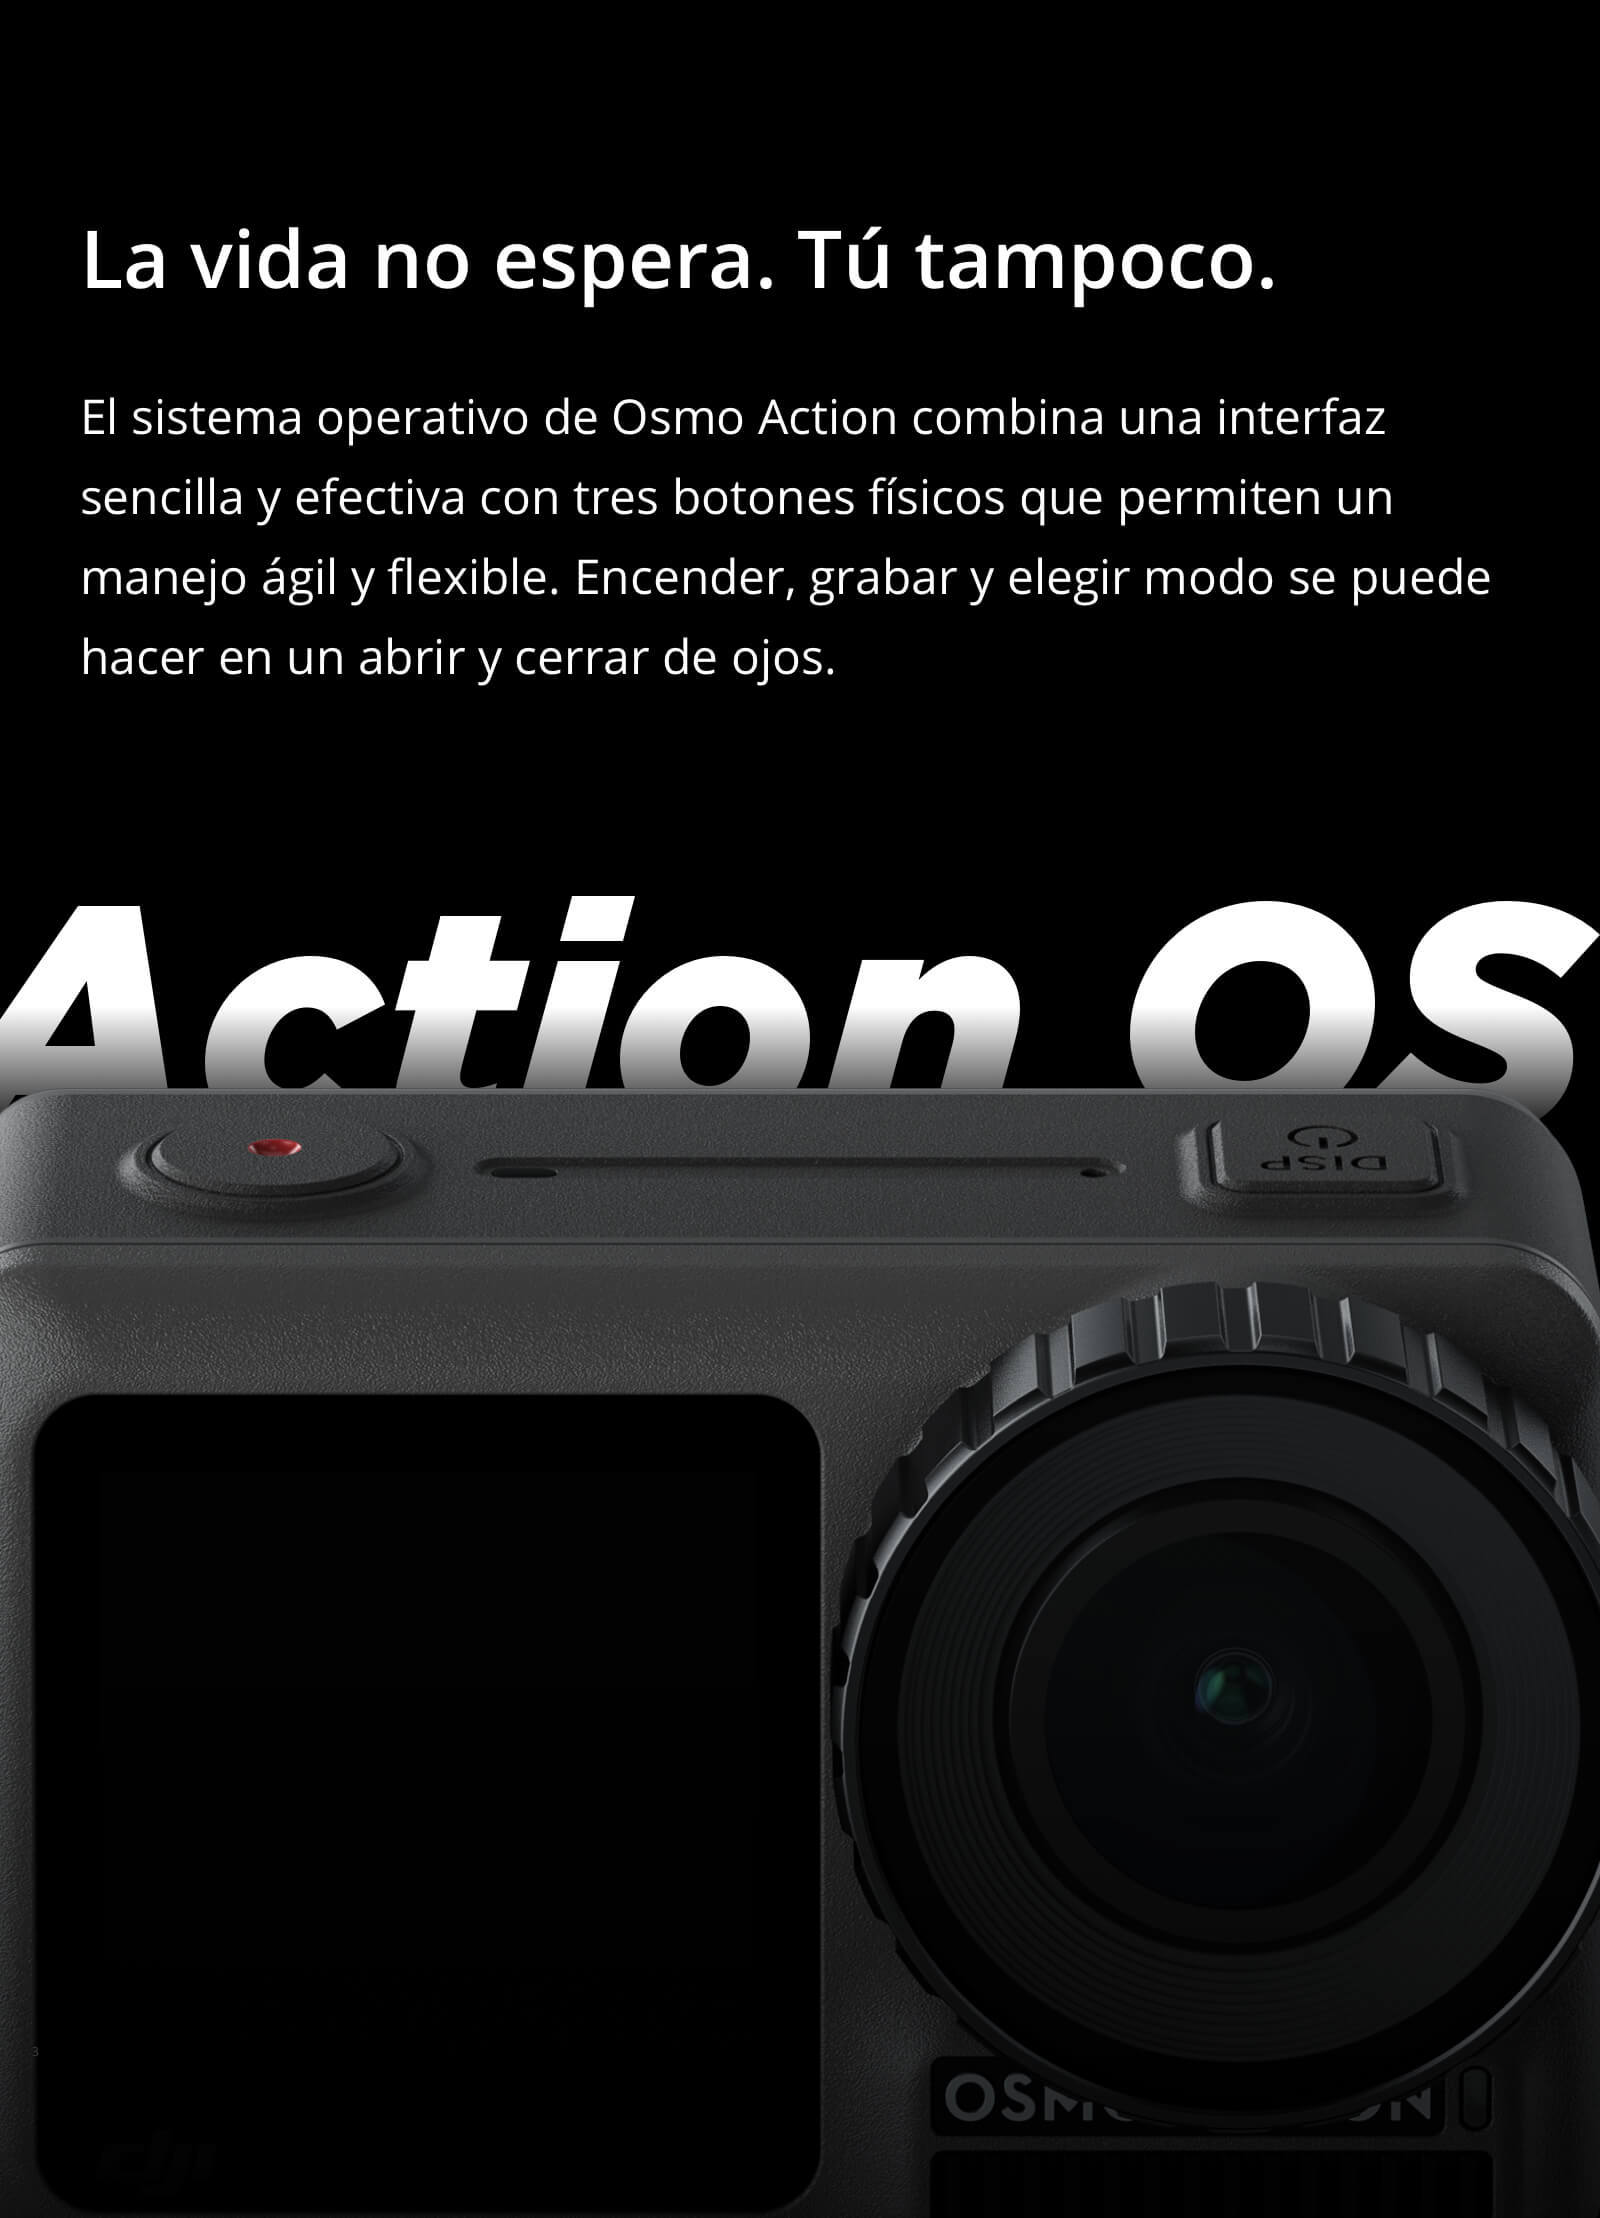 DJI_osmo_action_stockrc7